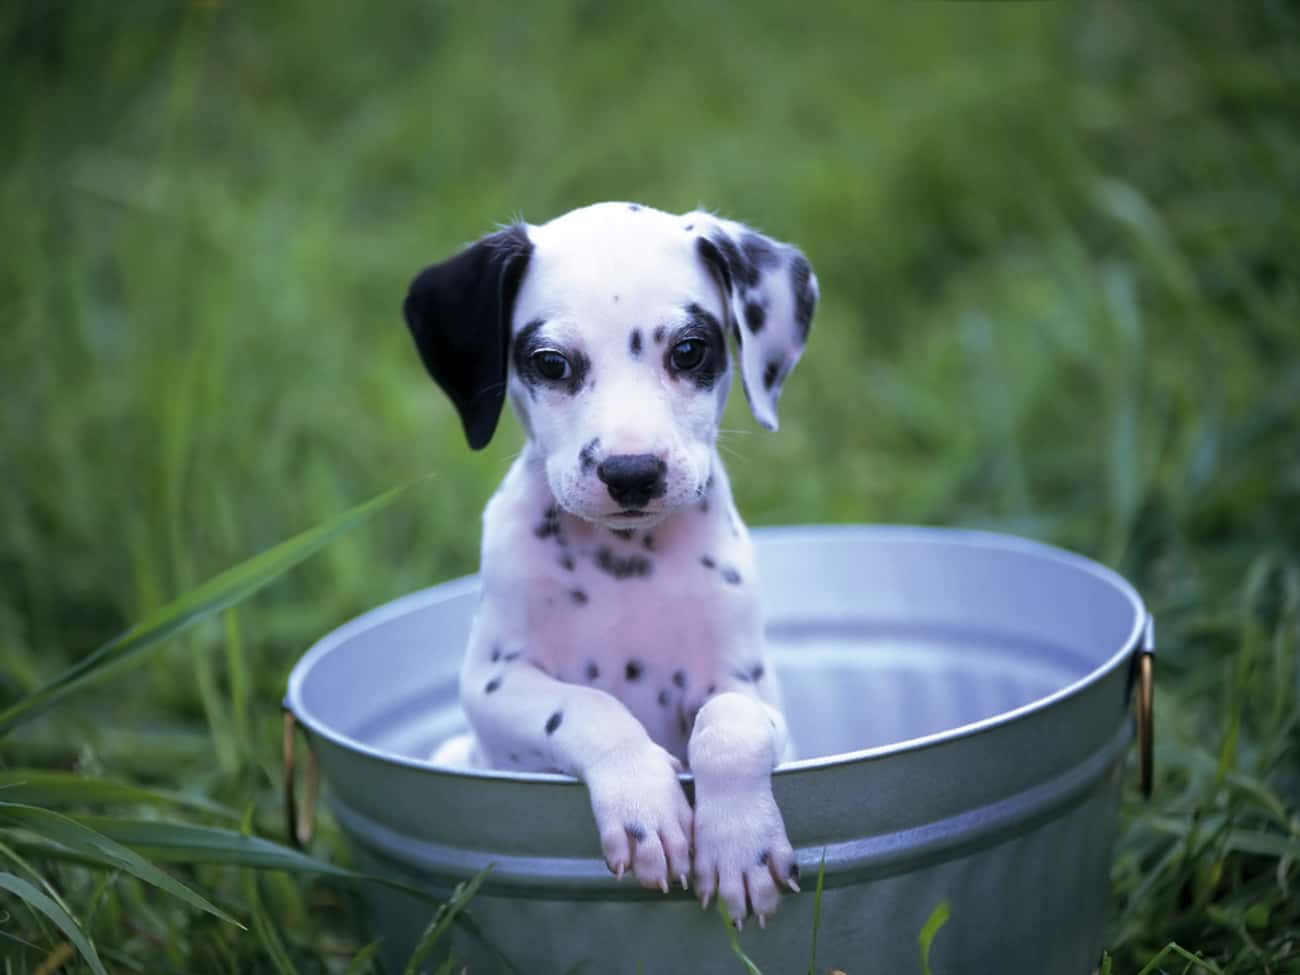 Lone Pup in a Bucket